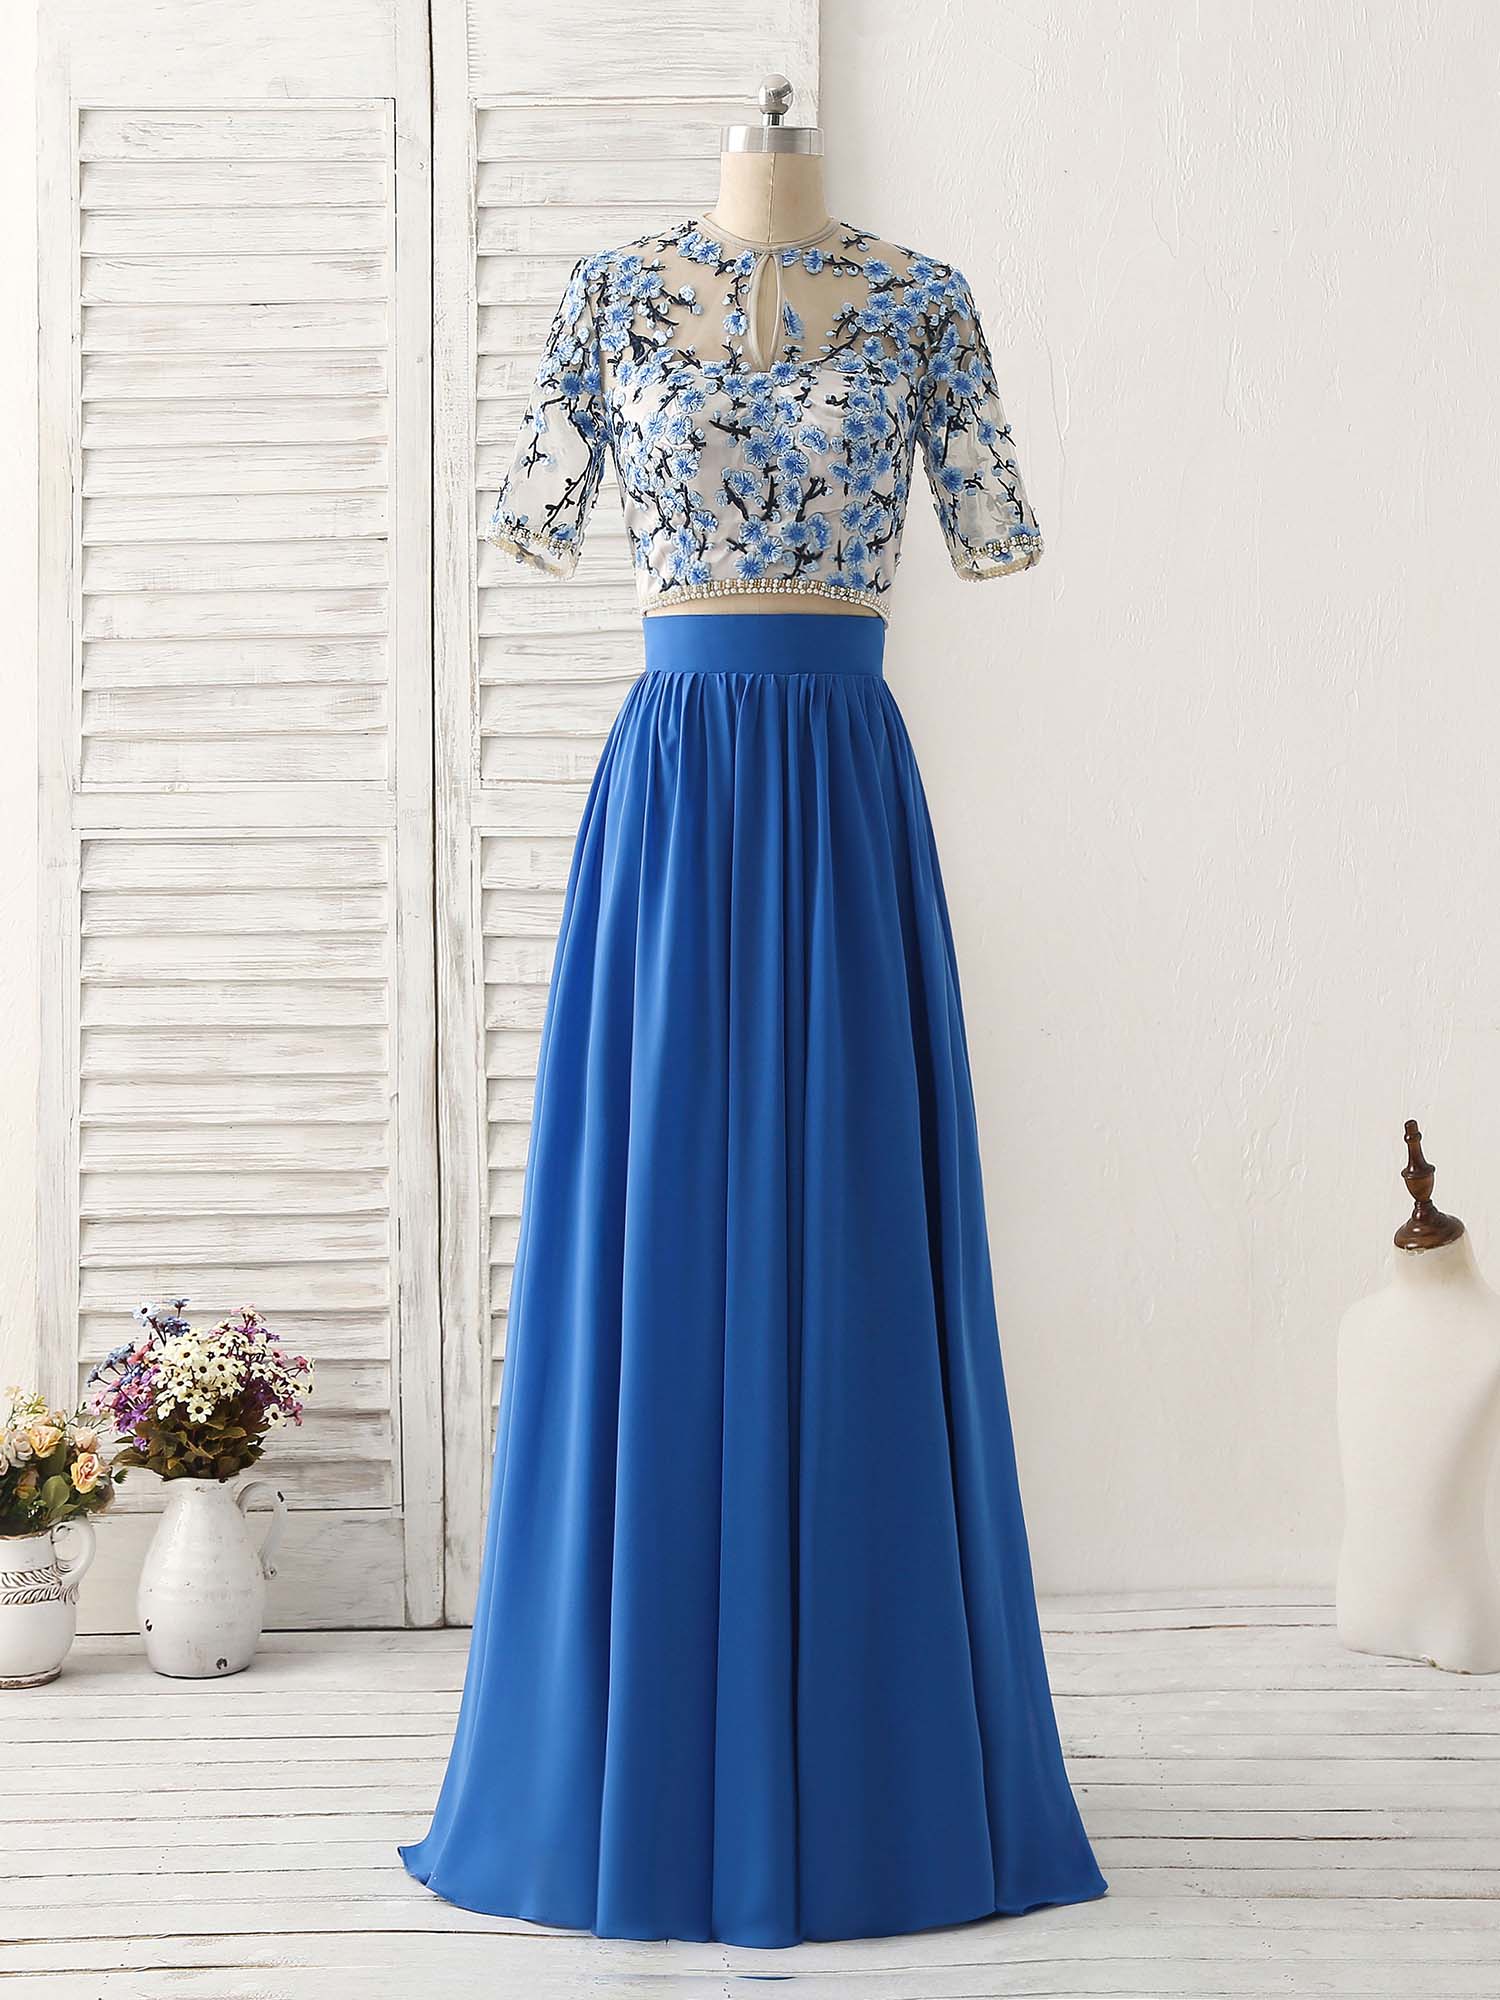 Unique Blue Two Pieces Long Corset Prom Dress Applique Corset Formal Dress outfit, Formal Dress For Teens